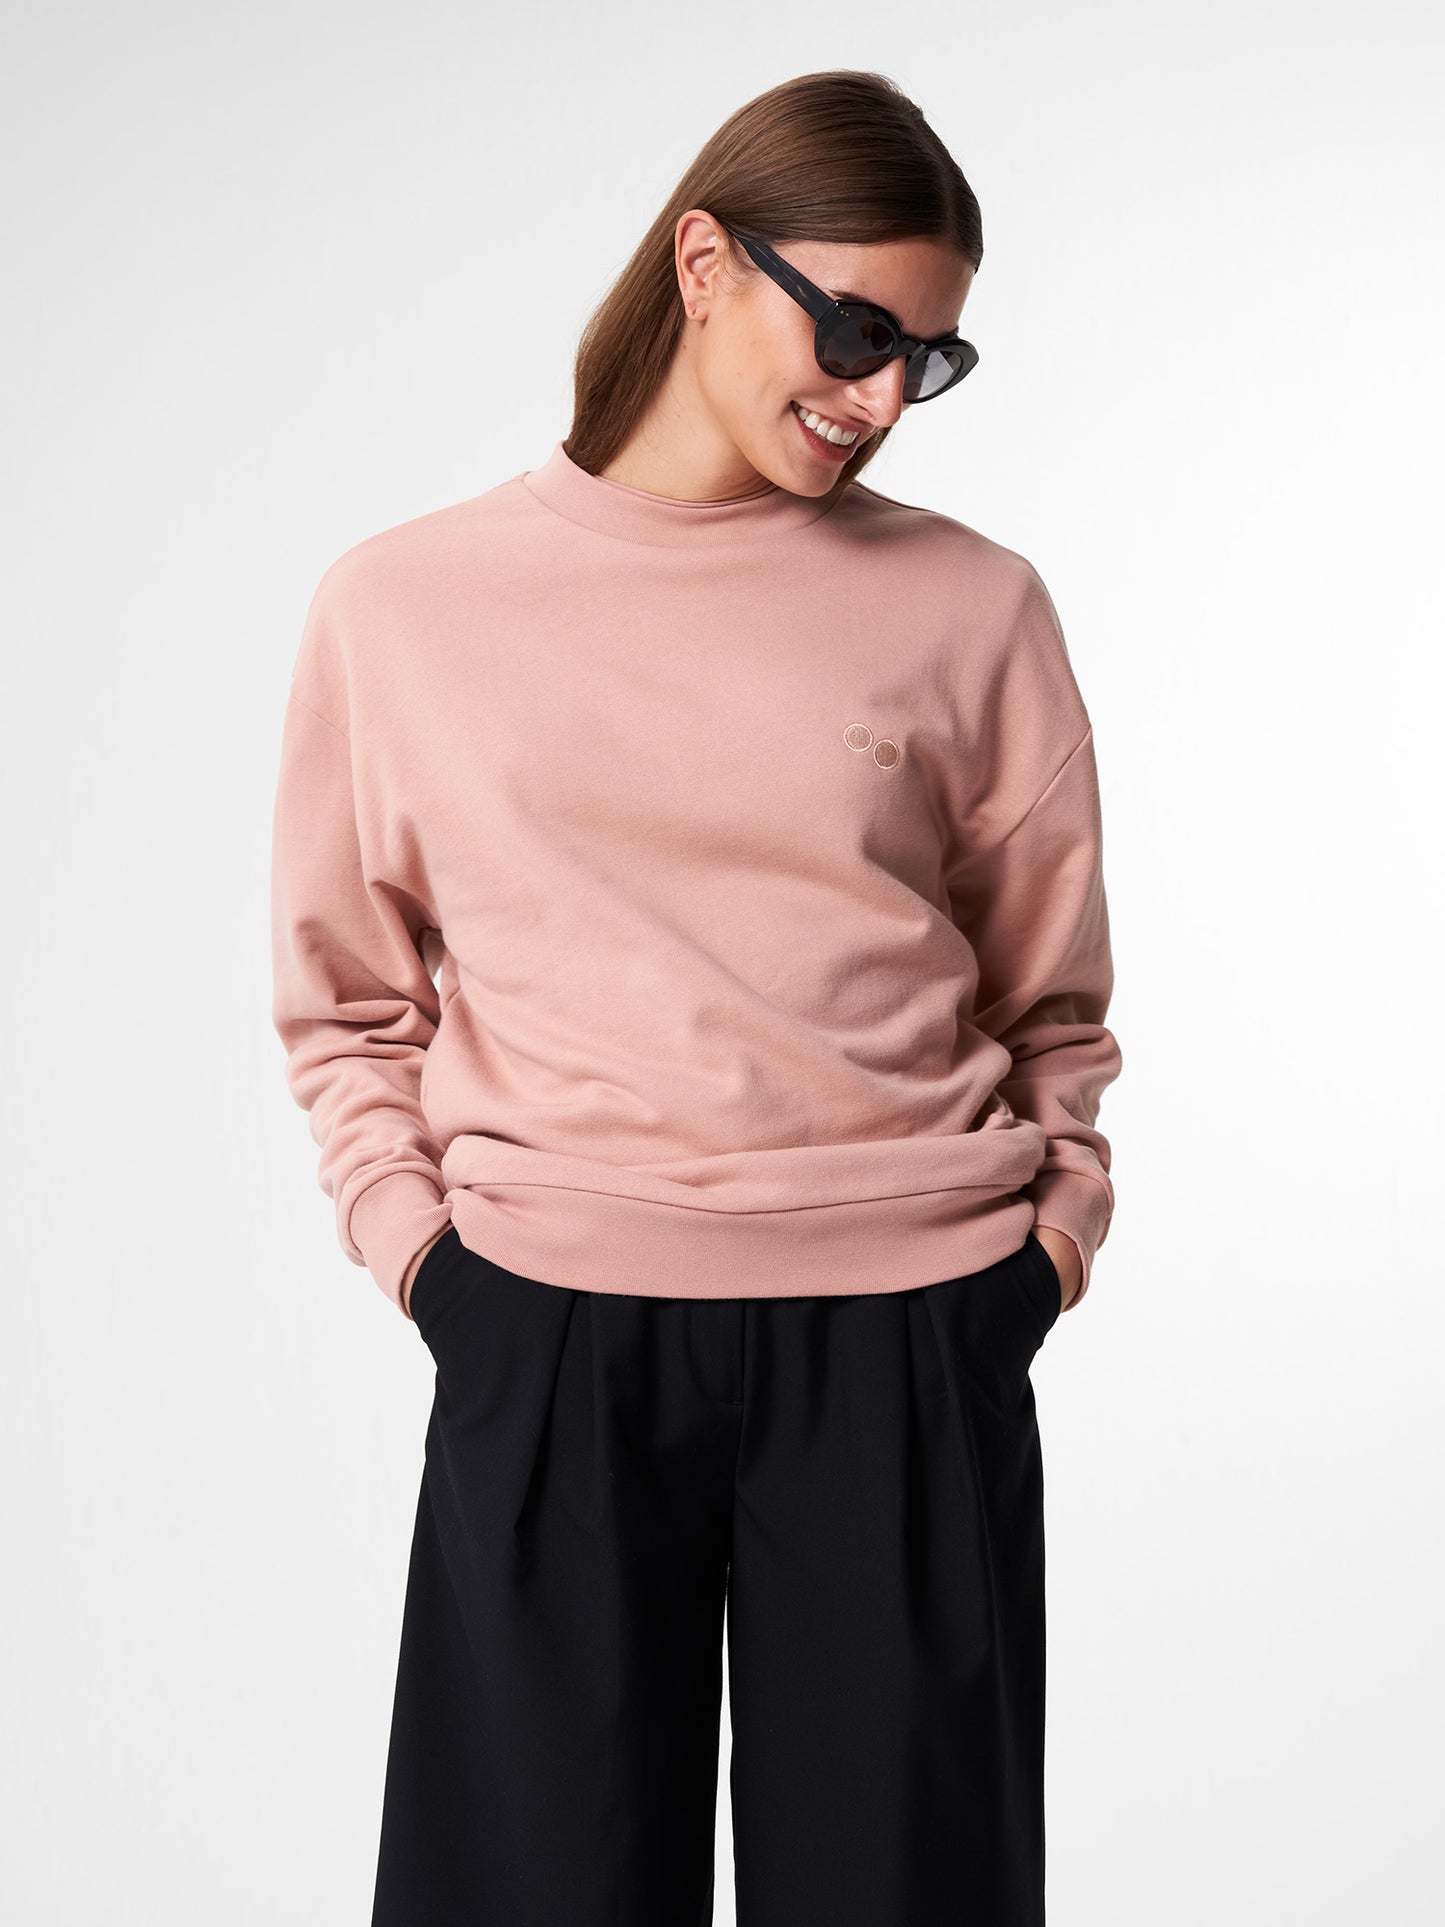 pinqponq-Sweatshirt-Unisex-Ash-Pink-model-front